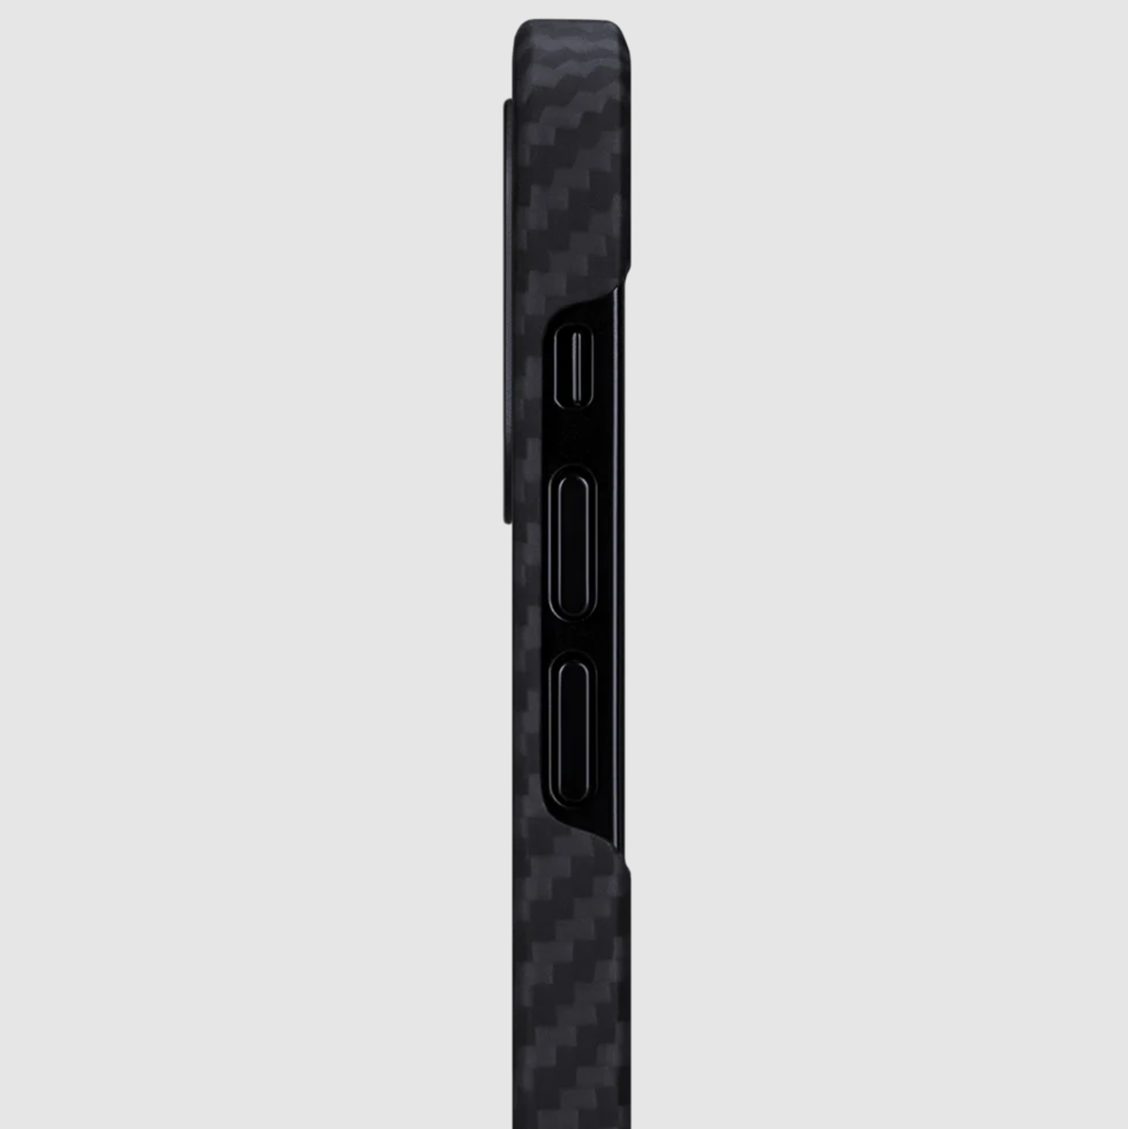 Pitaka - MagEZ Case for iPhone 12 Pro Max 6.7" - Black / Grey Twill